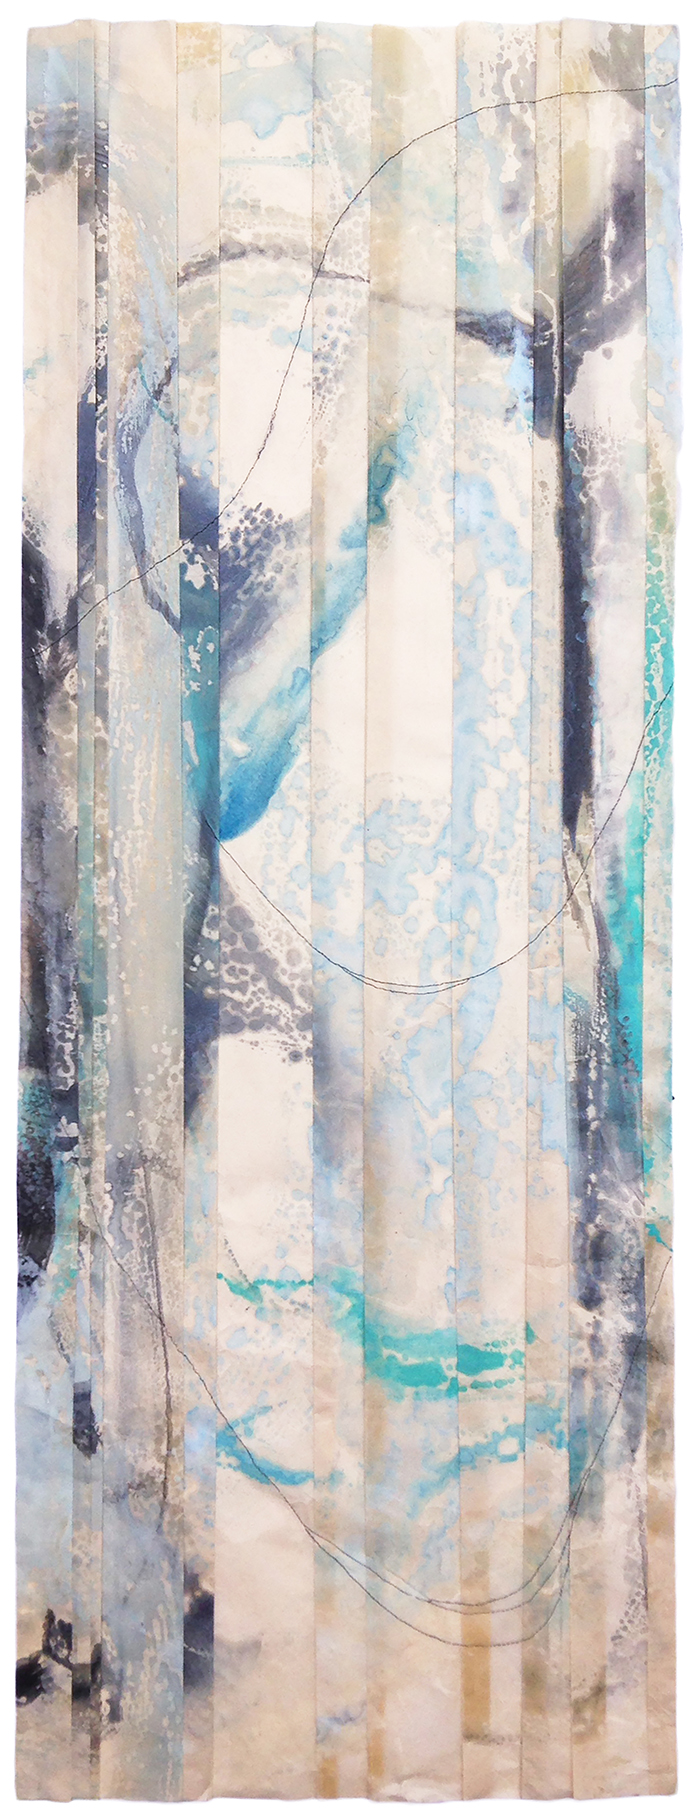 Folded September 2014 web, Pigmented Beeswax and Silk Thread on Kitakata, 48x18